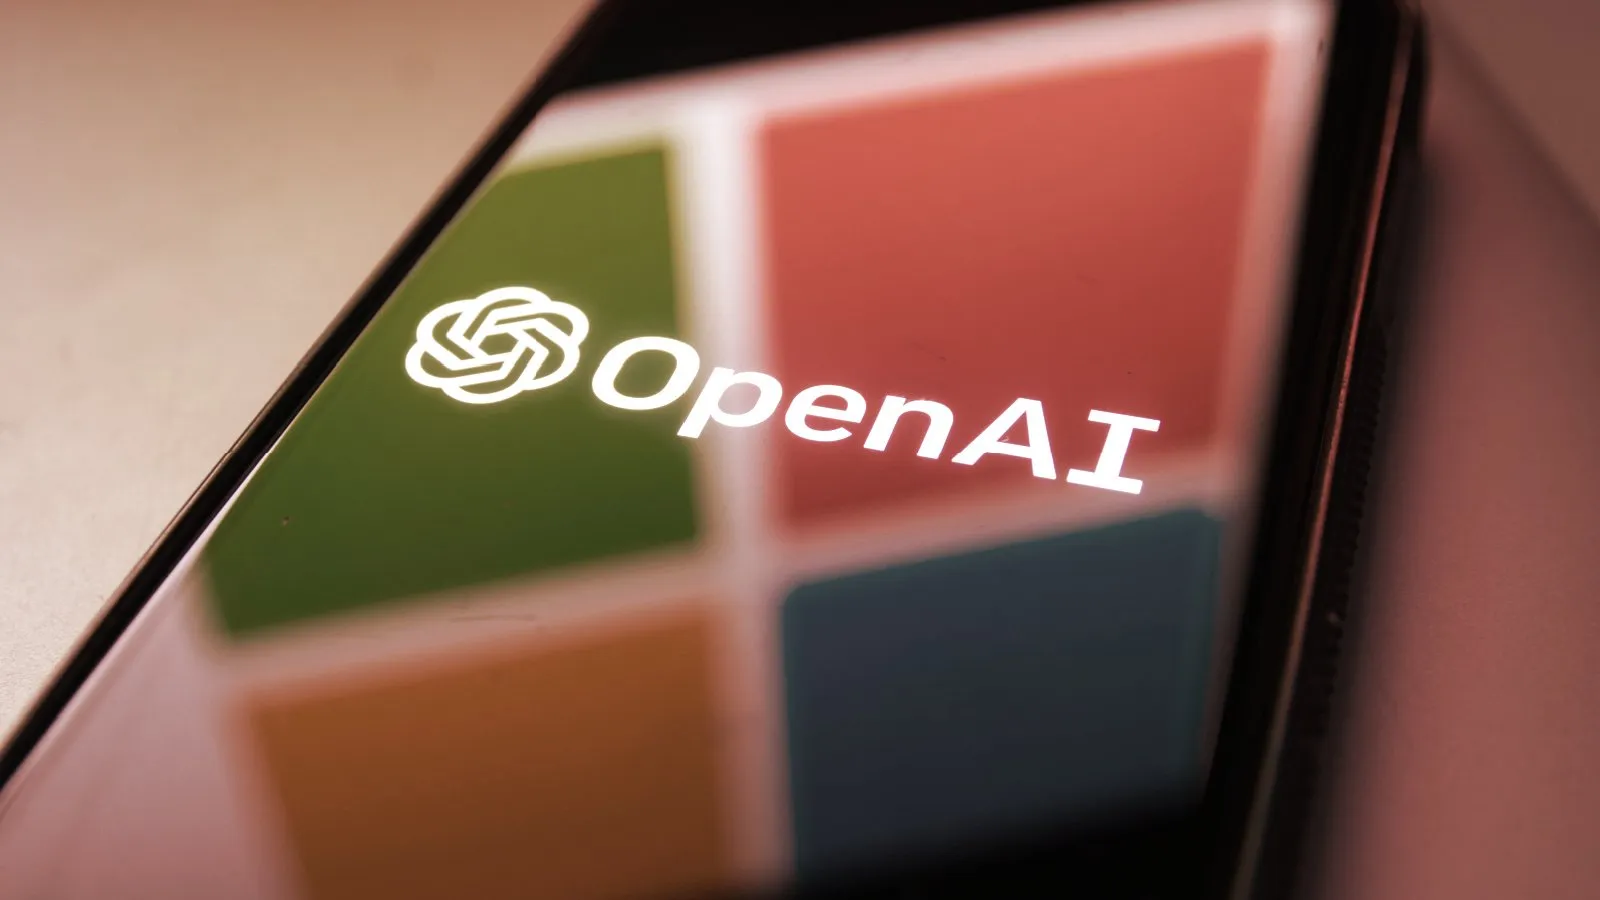 Microsoft logo reflection on smartphone with OpenAI logo. Source: Shutterstock